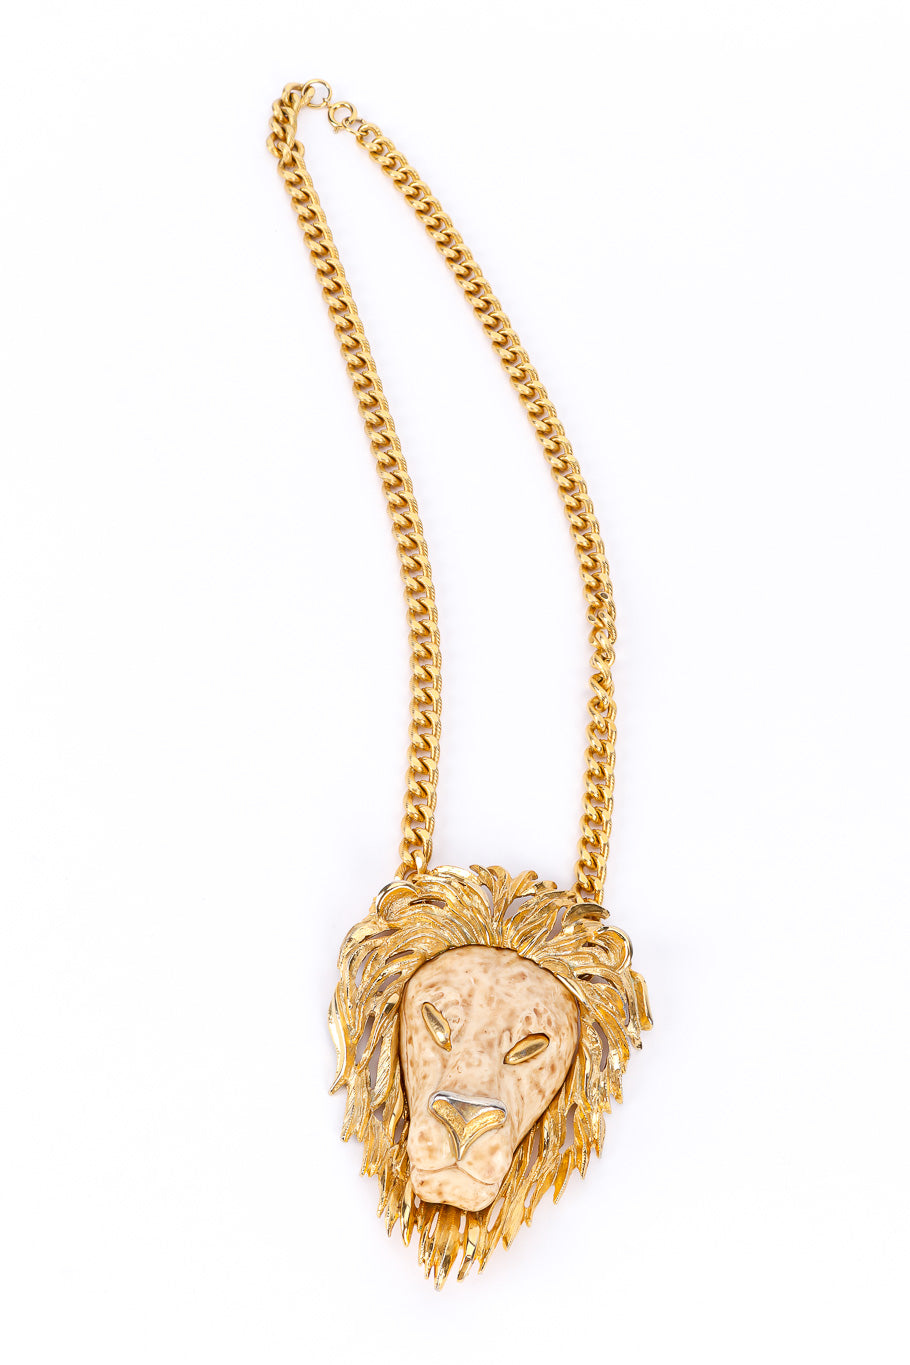 Vintage Luca Razza Lion Head Pendant Necklace full front view @Recessla